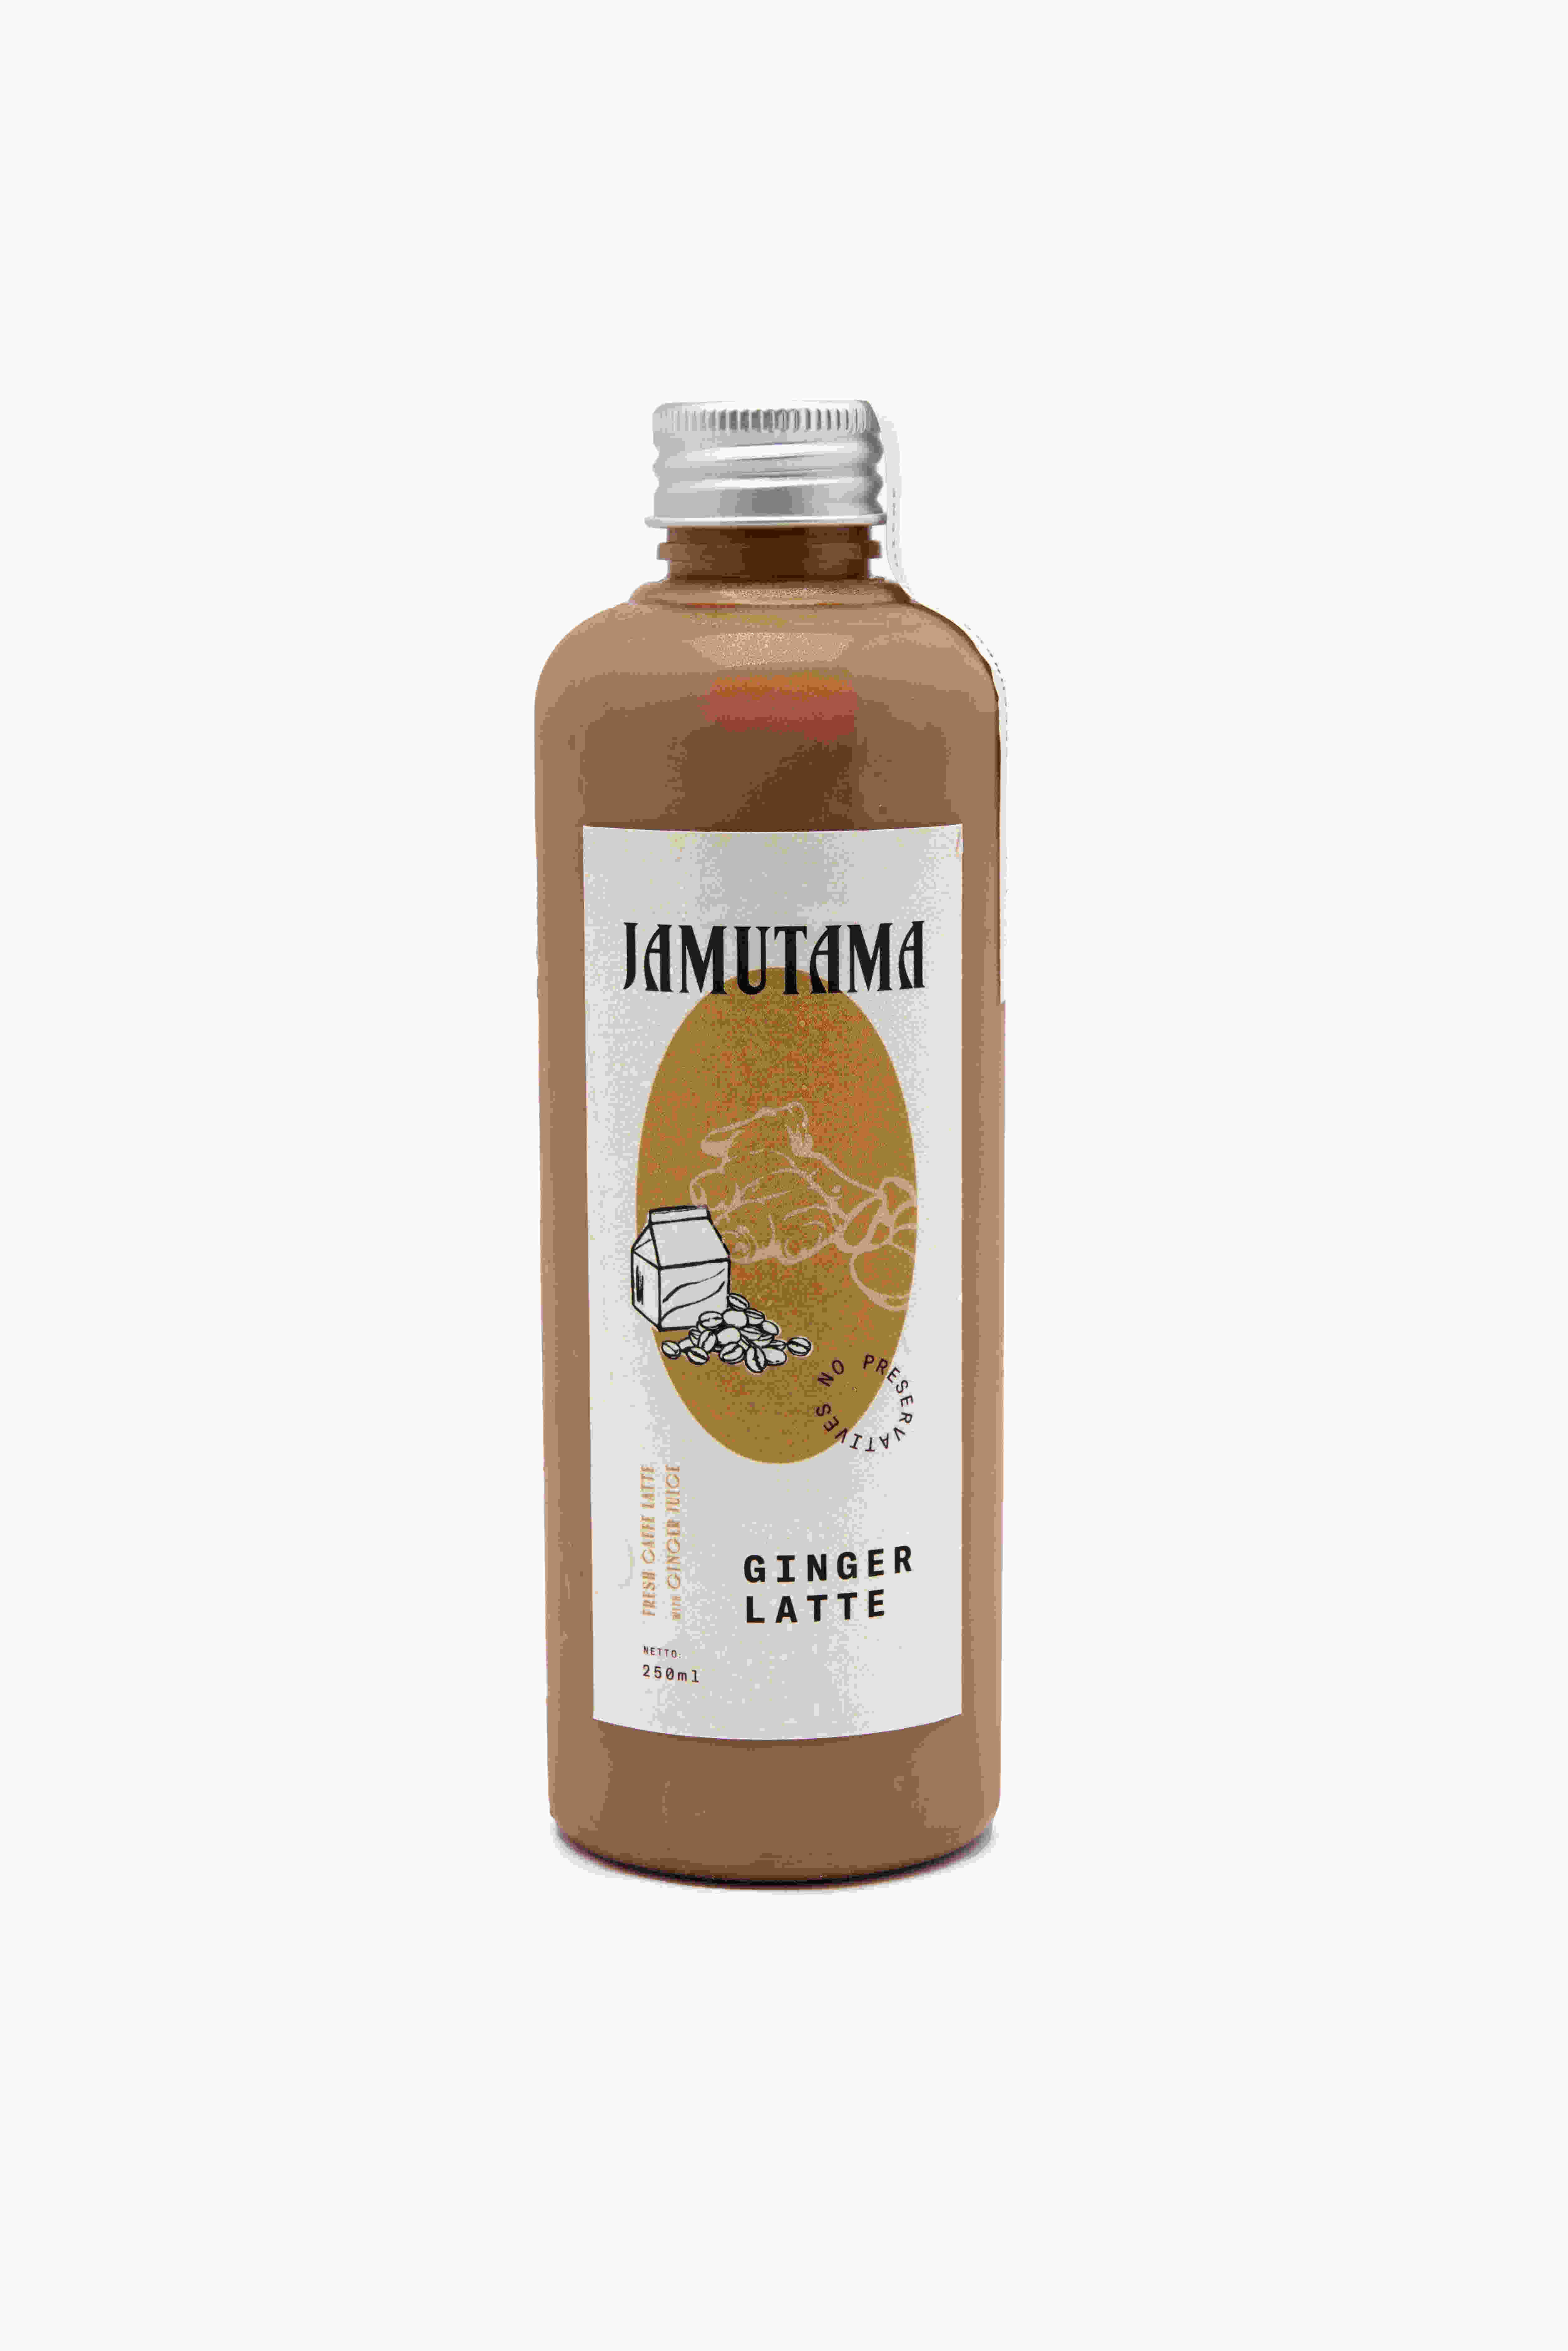 Jamutama Ginger Latte / Kopi Susu Jahe (250ml)